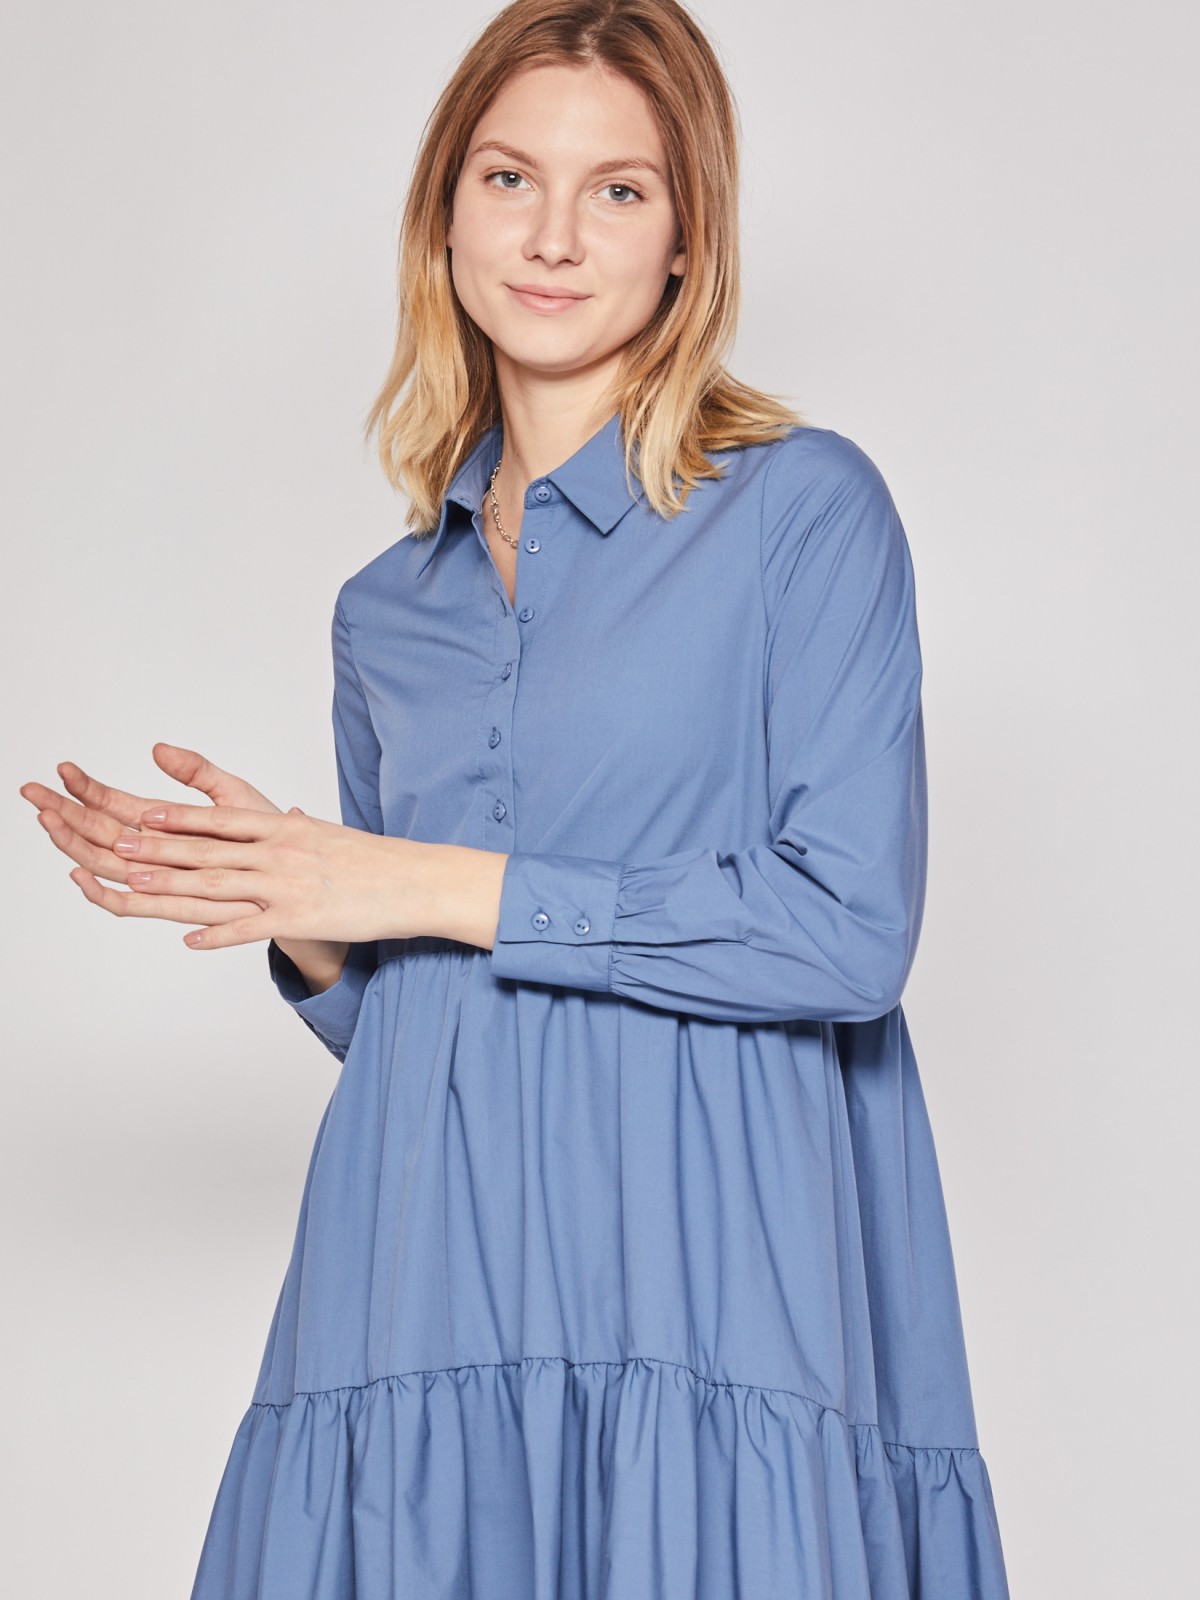 Ярусное платье-рубашка zolla 022138291223, цвет голубой, размер XS - фото 2